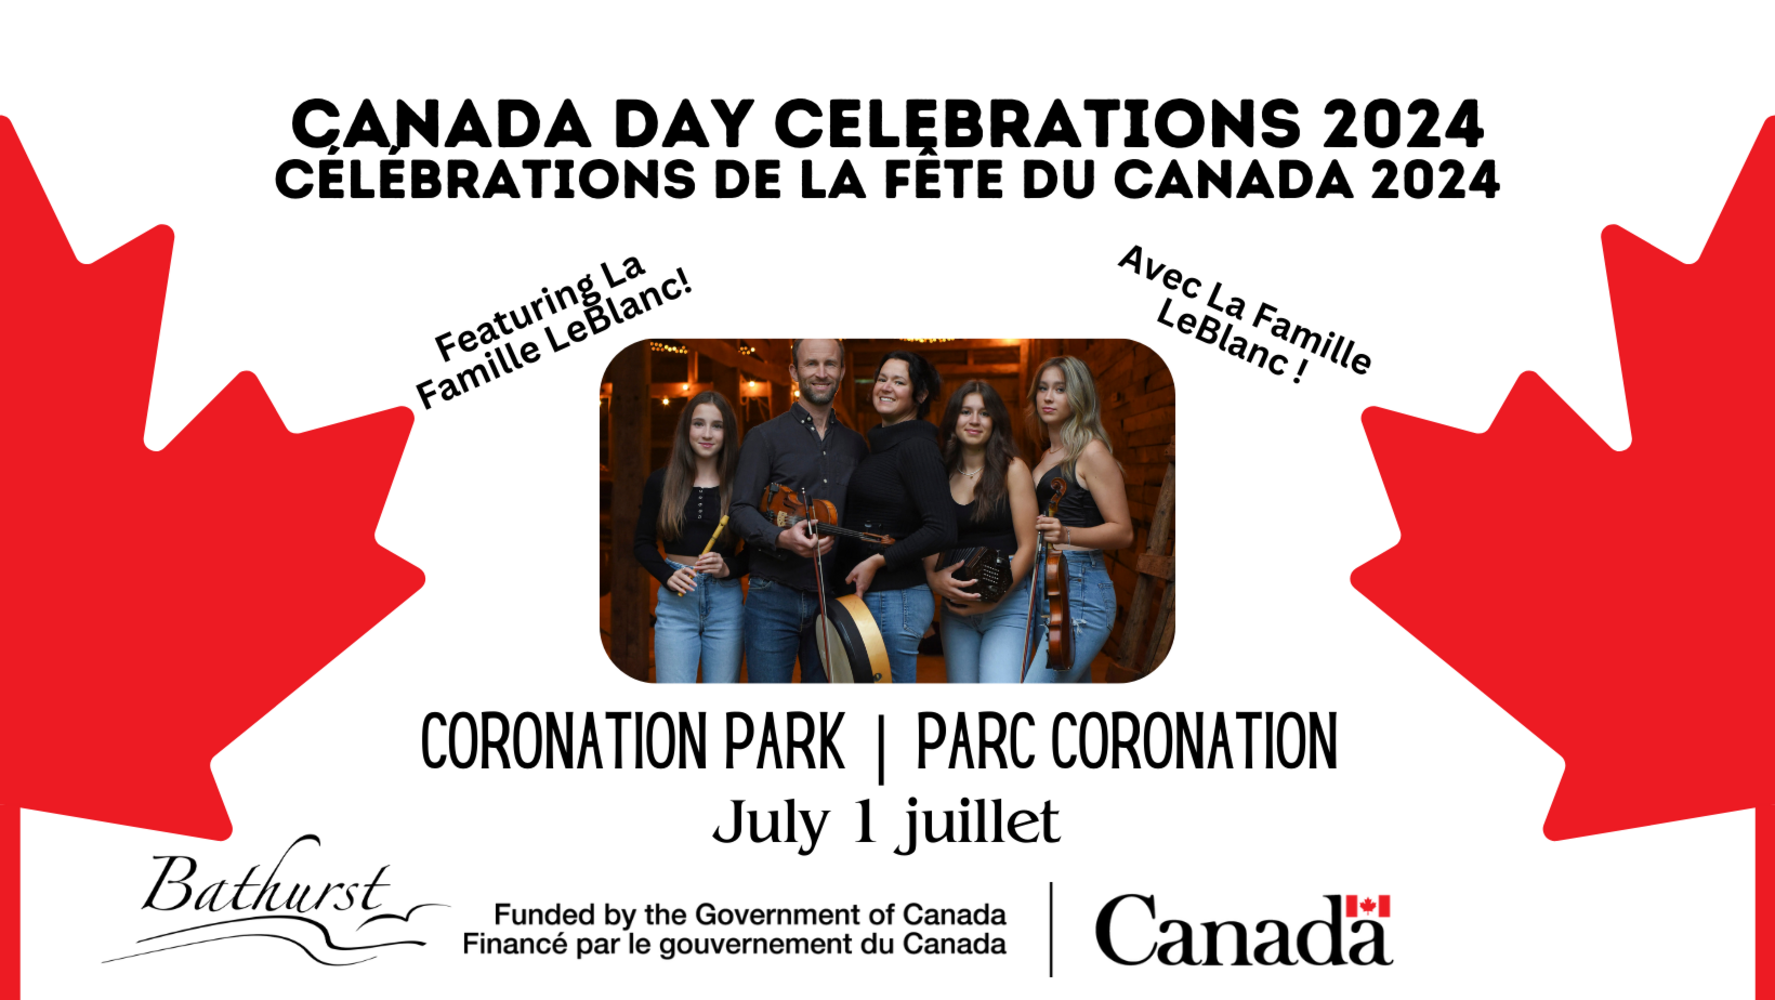 Canada Day 2024 Celebrations Image